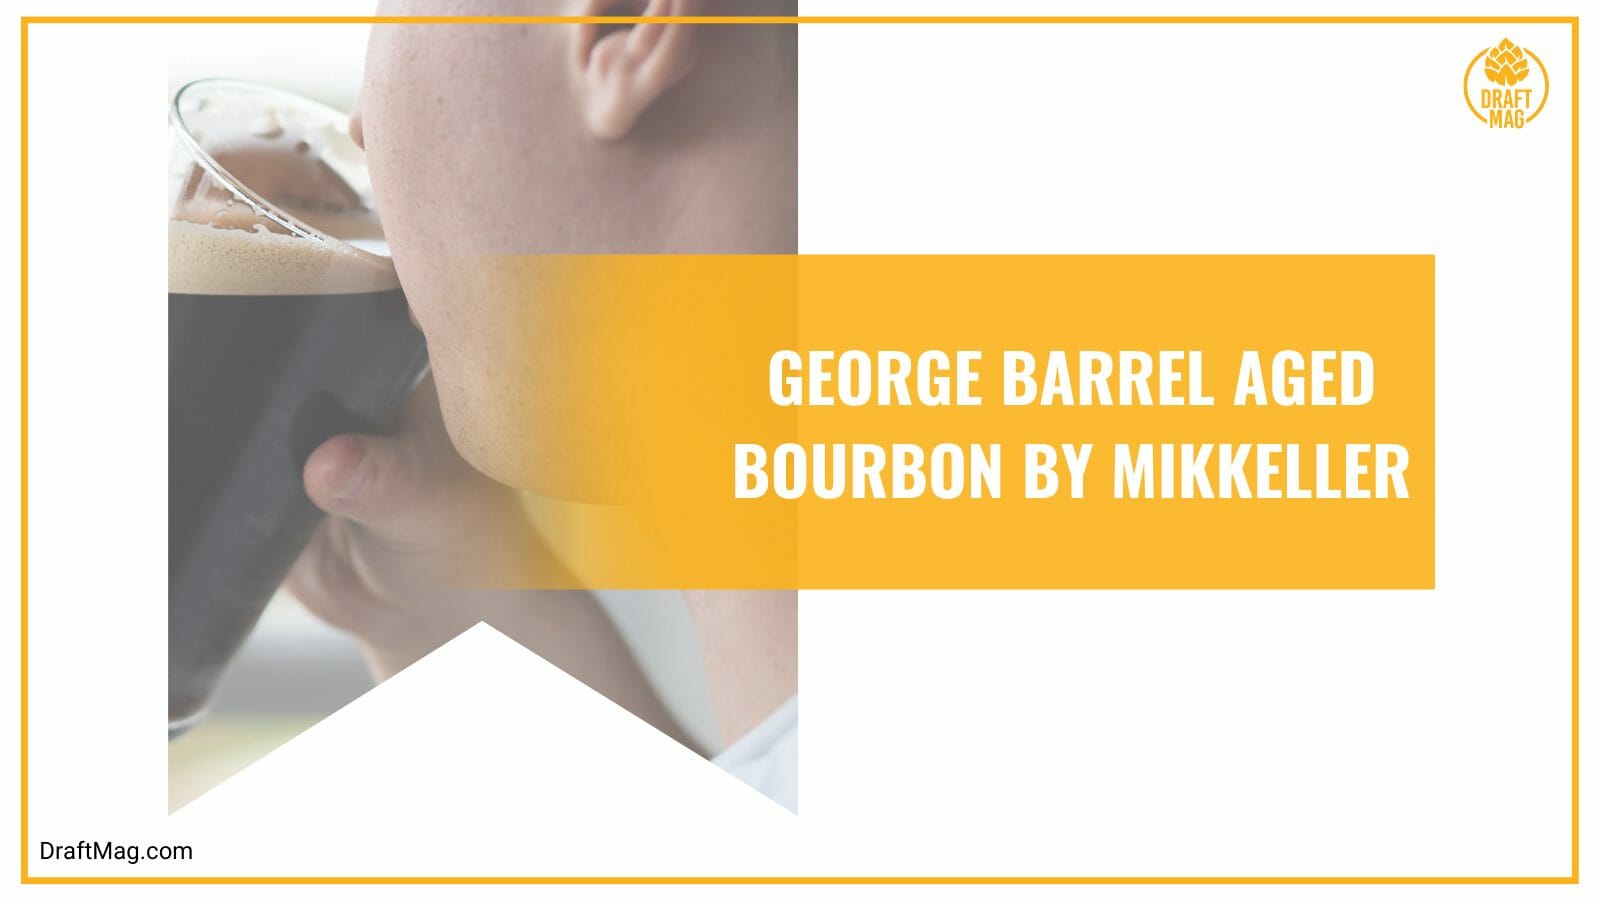 George barrel aged bourbon